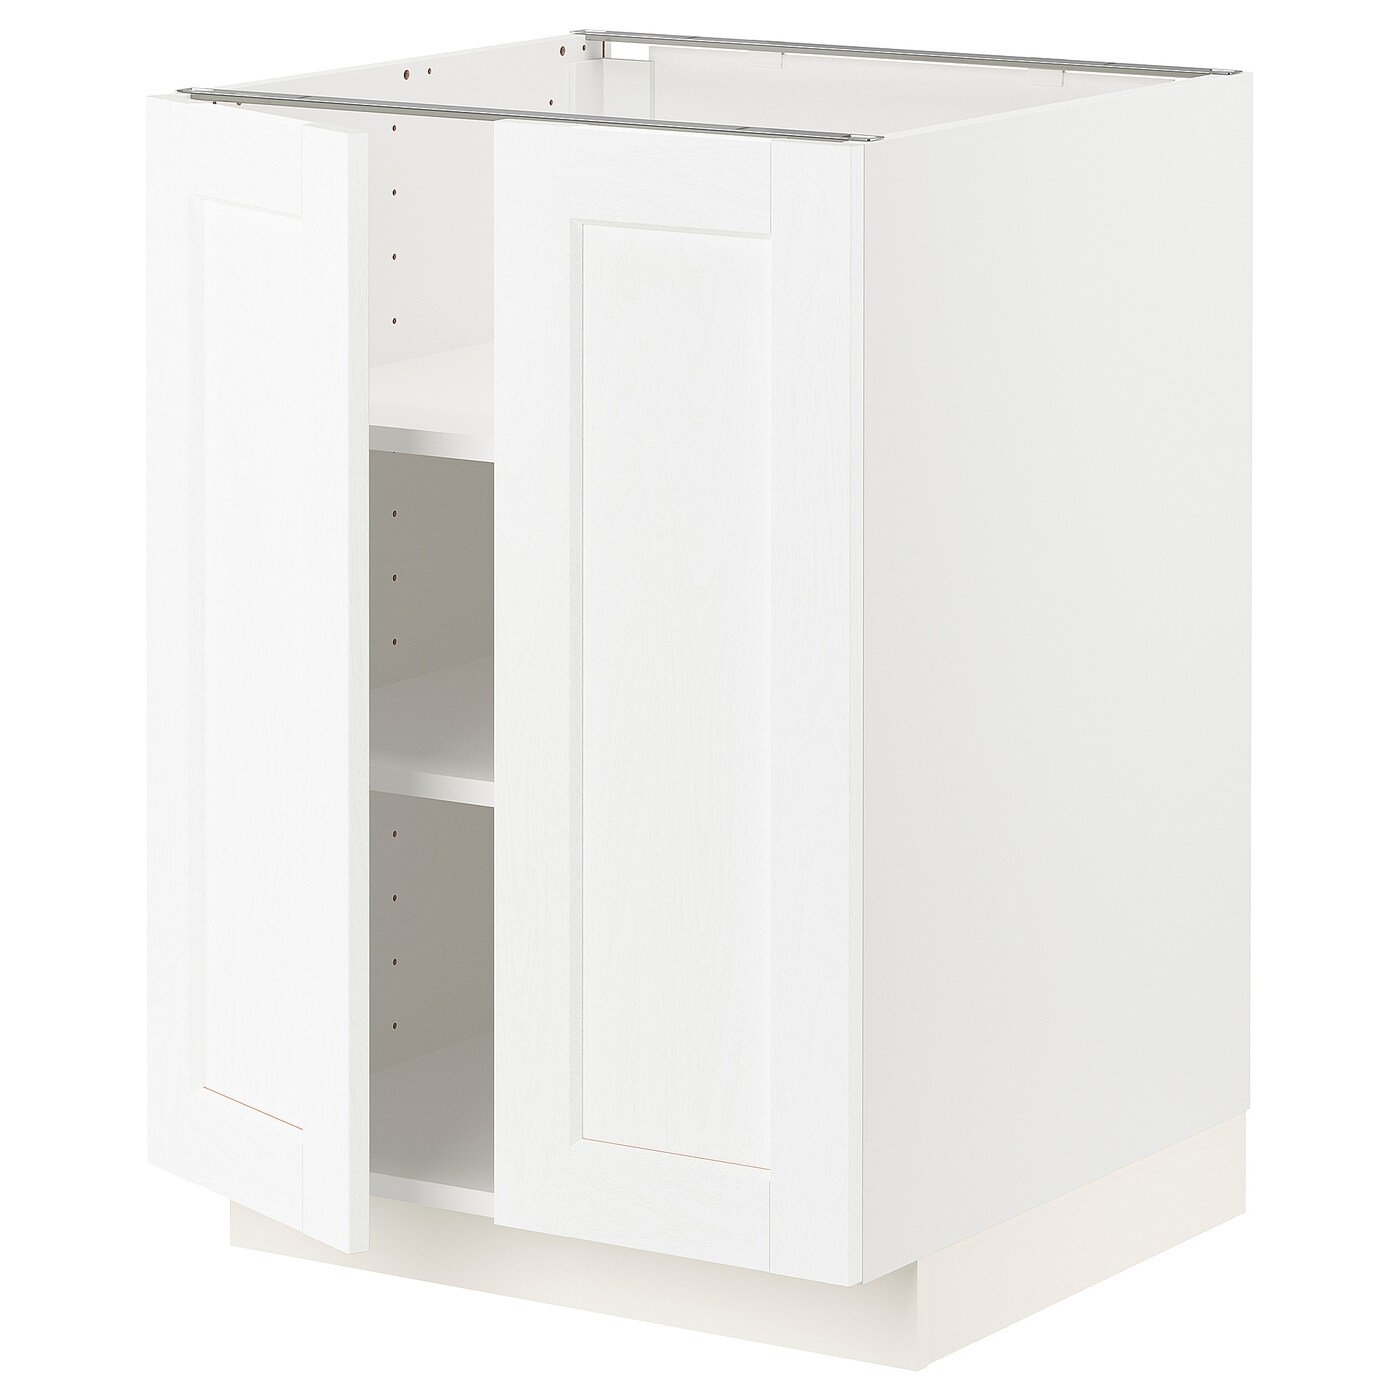 Напольный шкаф - METOD IKEA/ МЕТОД ИКЕА,  60х88 см, белый